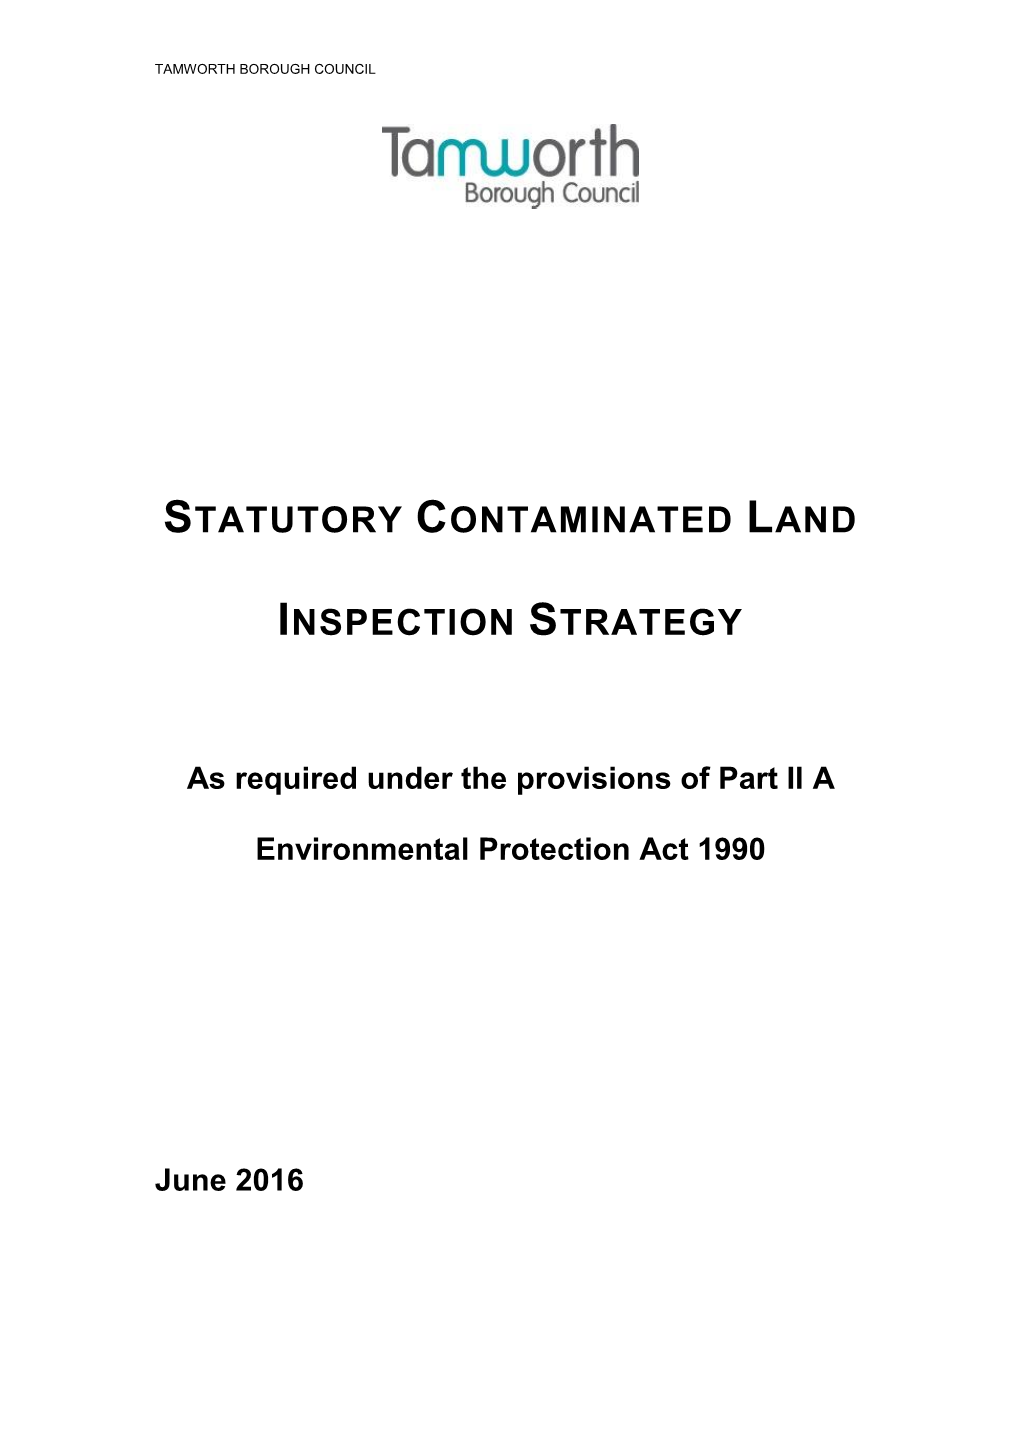 Statutory Contaminated Land Inspection Strategy